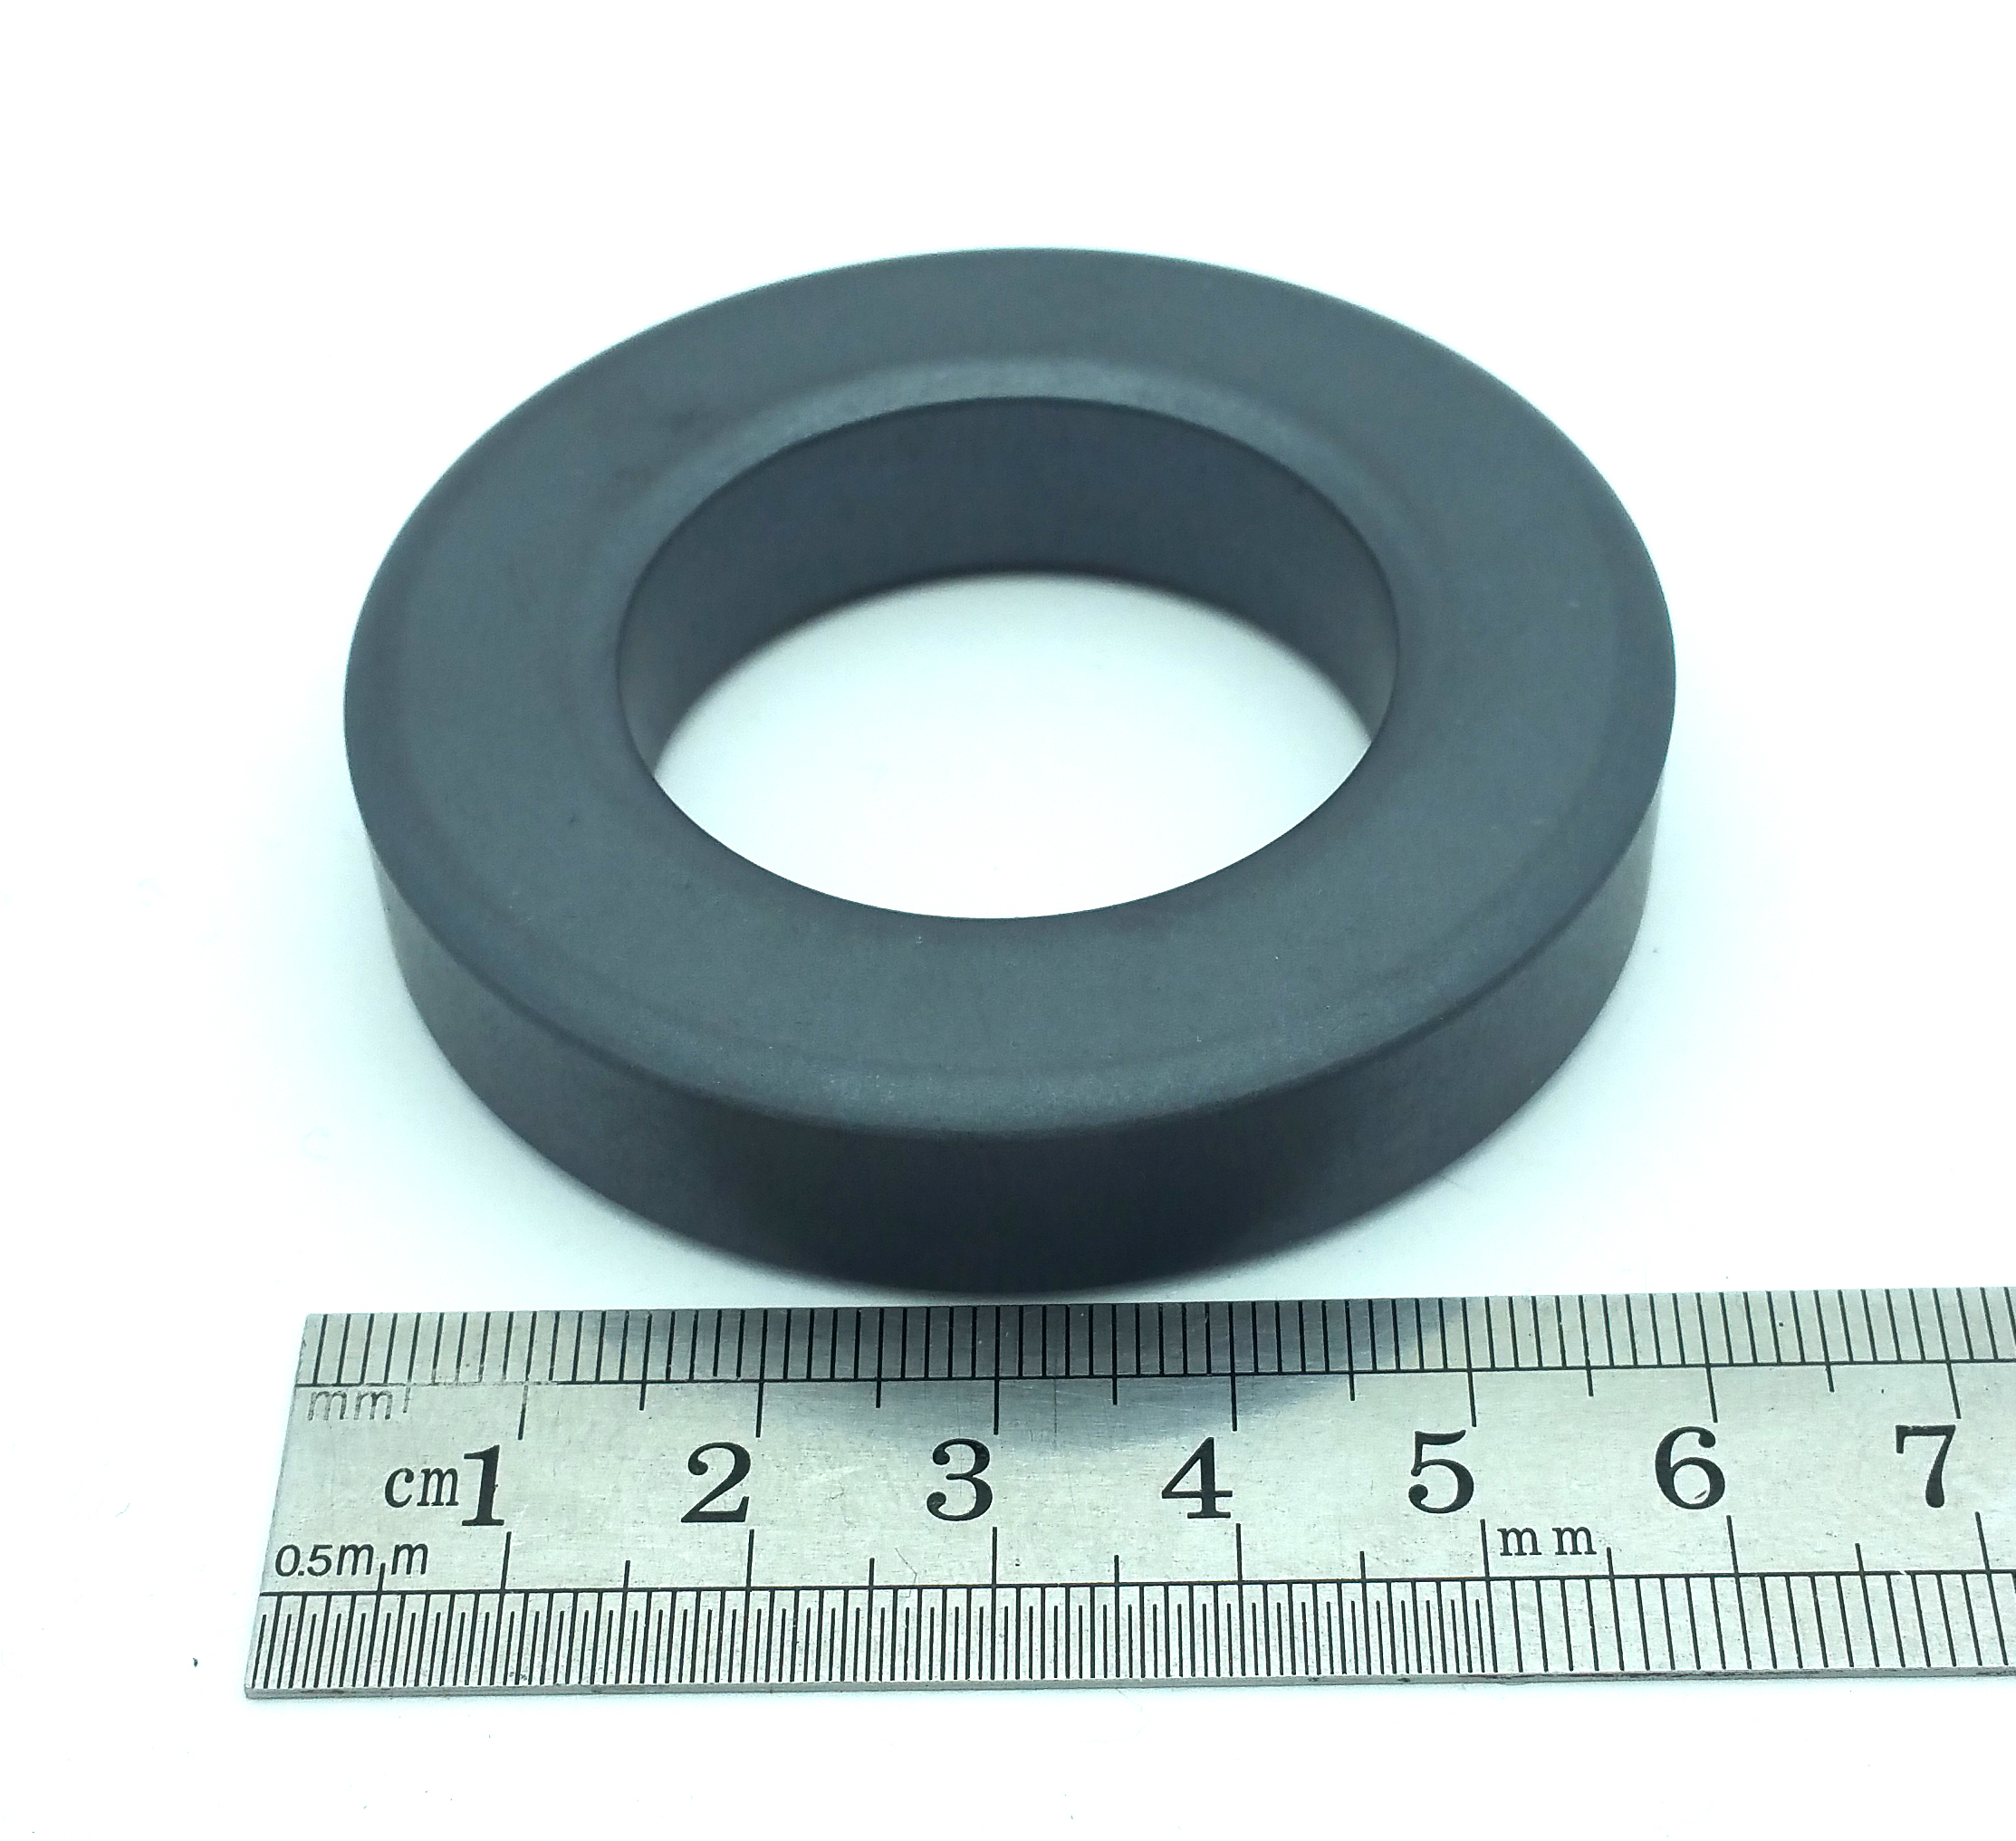 FT-240-43 Ferrite toroid core 2.4-inch diameter #43 Material 10pcs